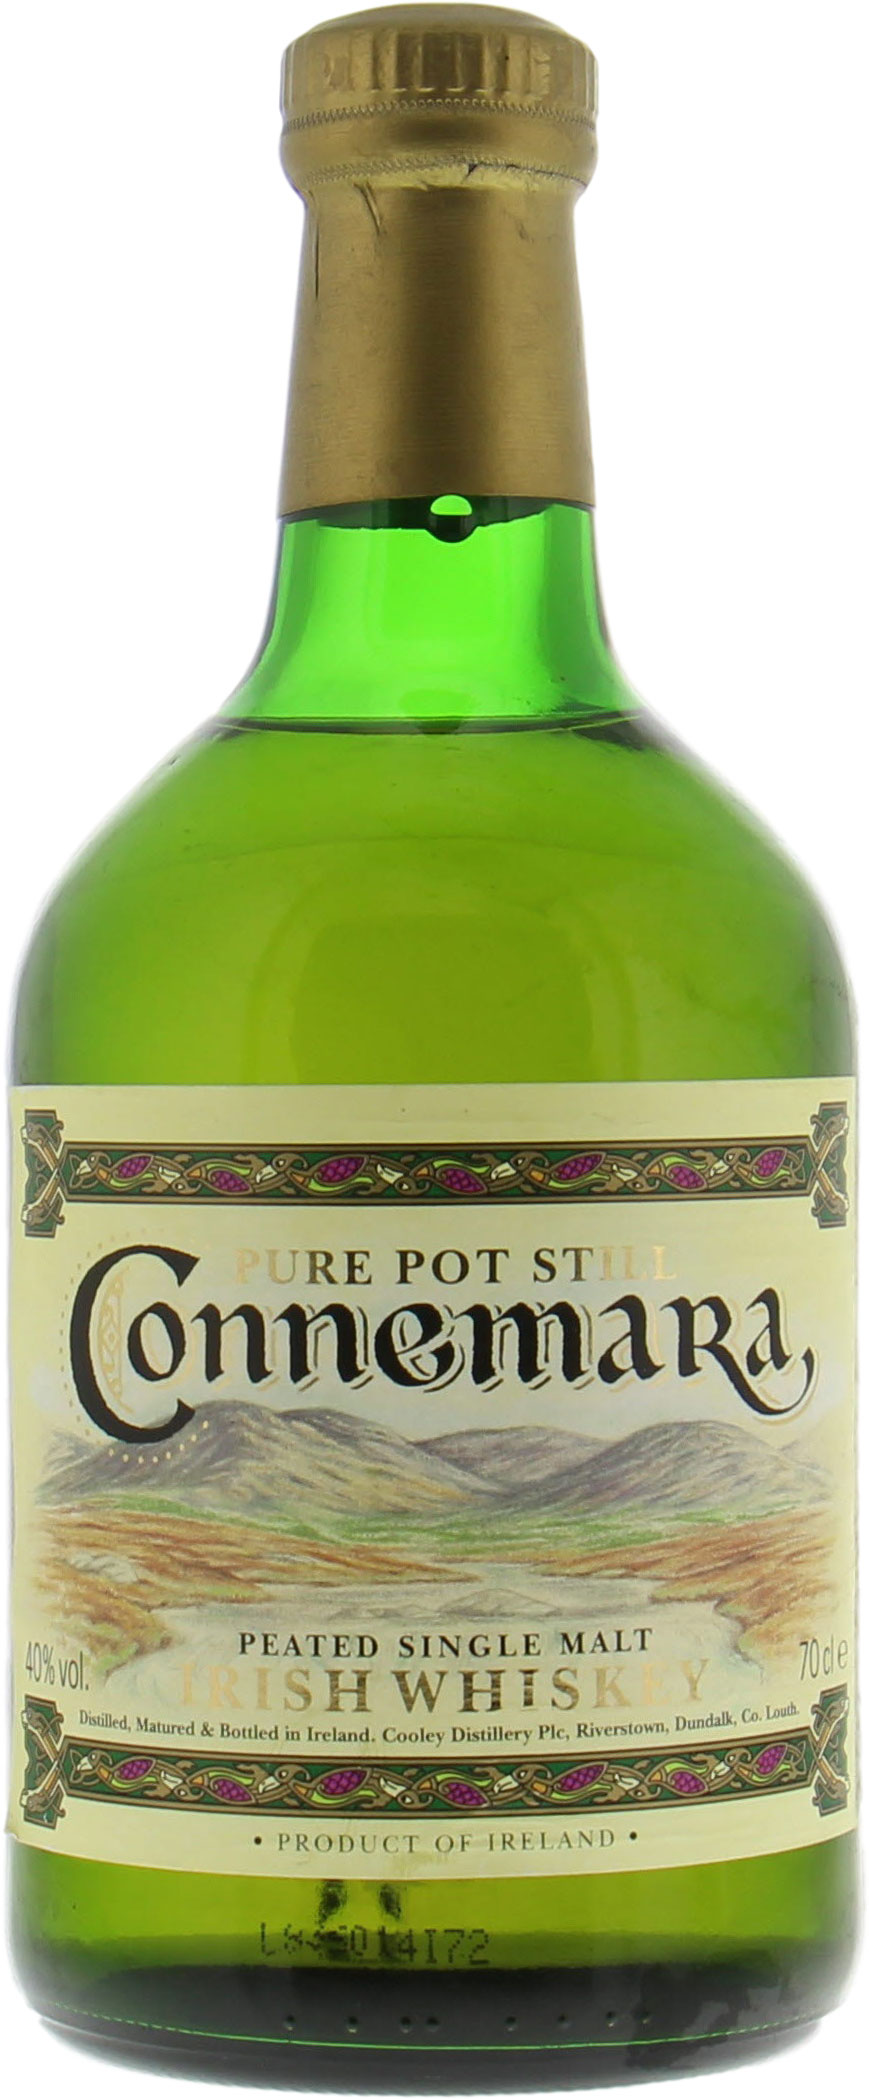 Cooley Distillery - Connemara Peated Single Malt 40% NV No Original Container Included!